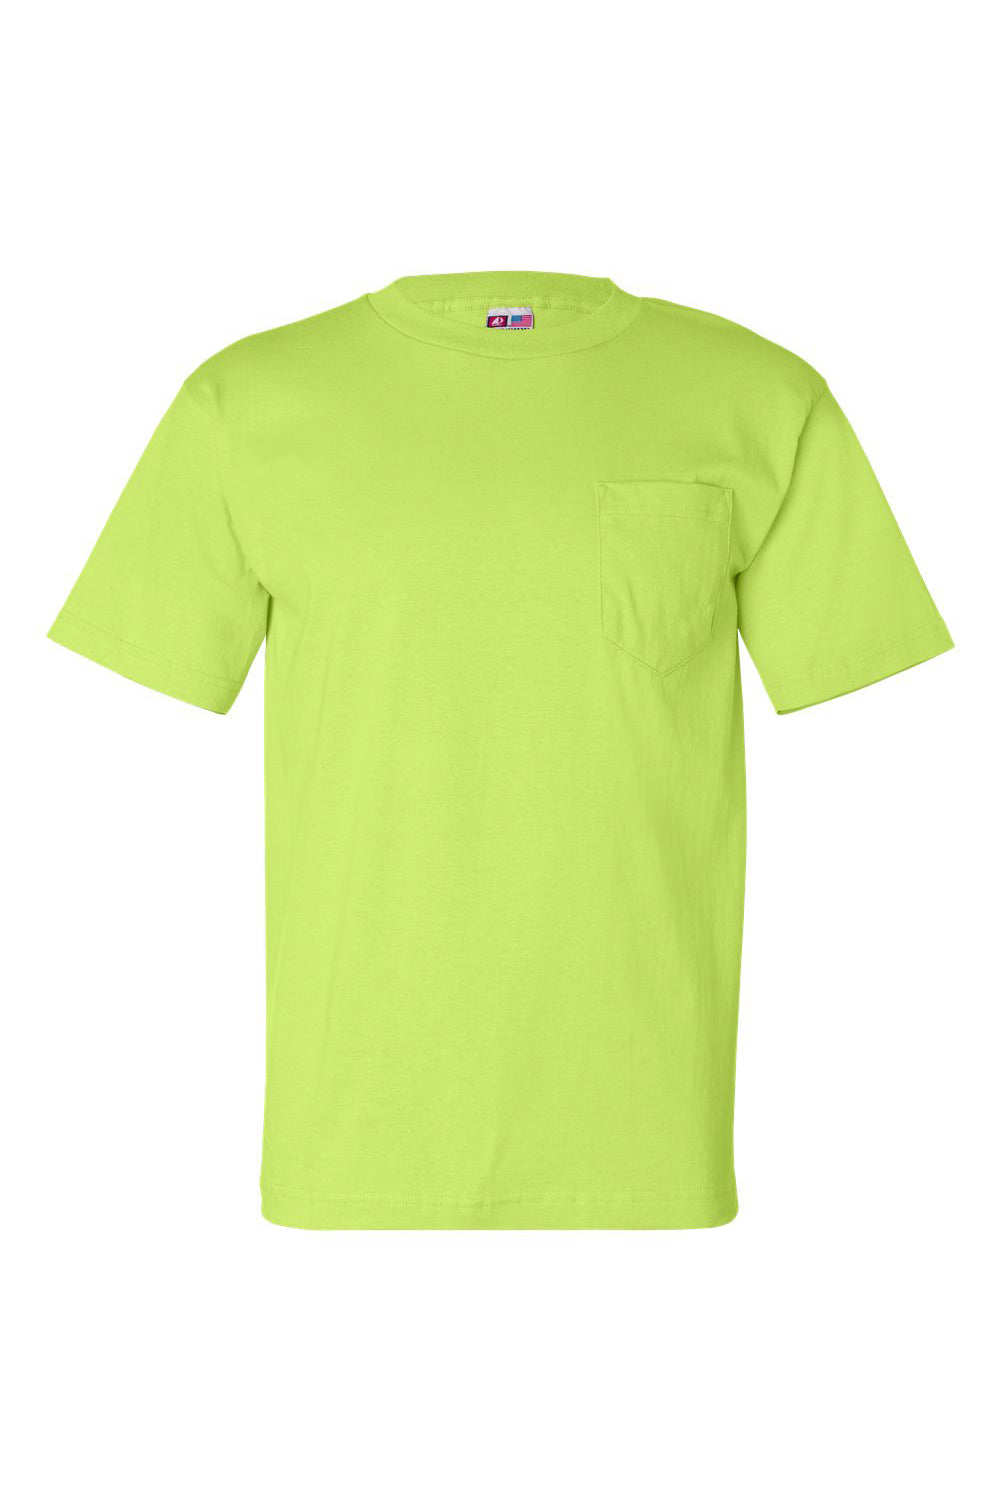 Bayside BA7100 Mens USA Made Short Sleeve Crewneck T-Shirt w/ Pocket Lime Green Flat Front